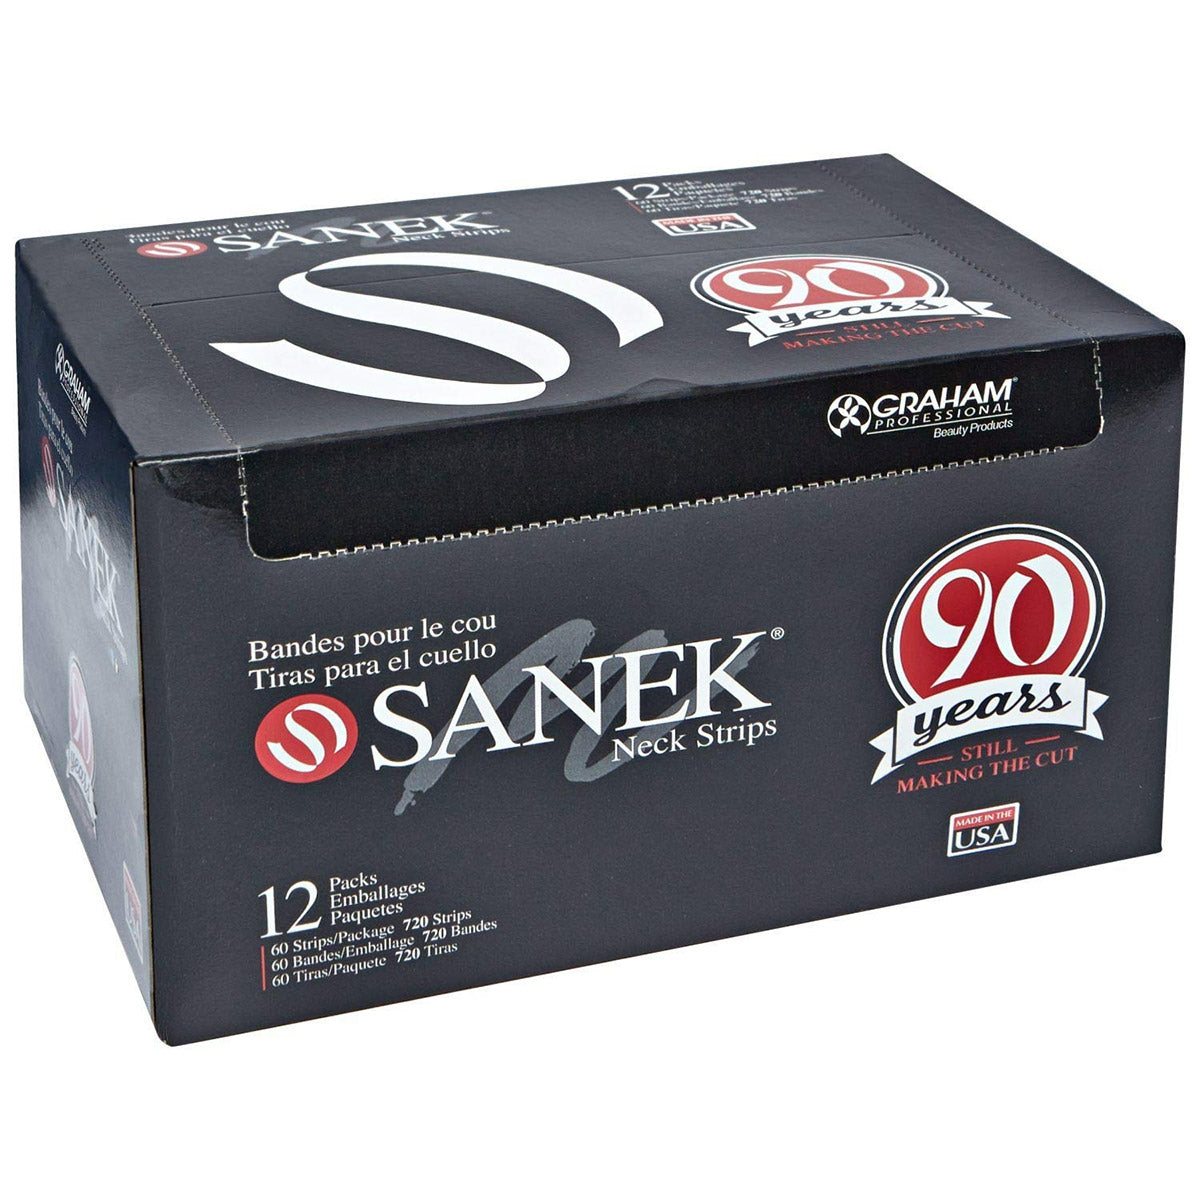 Sanek Neck Strips 12 Count